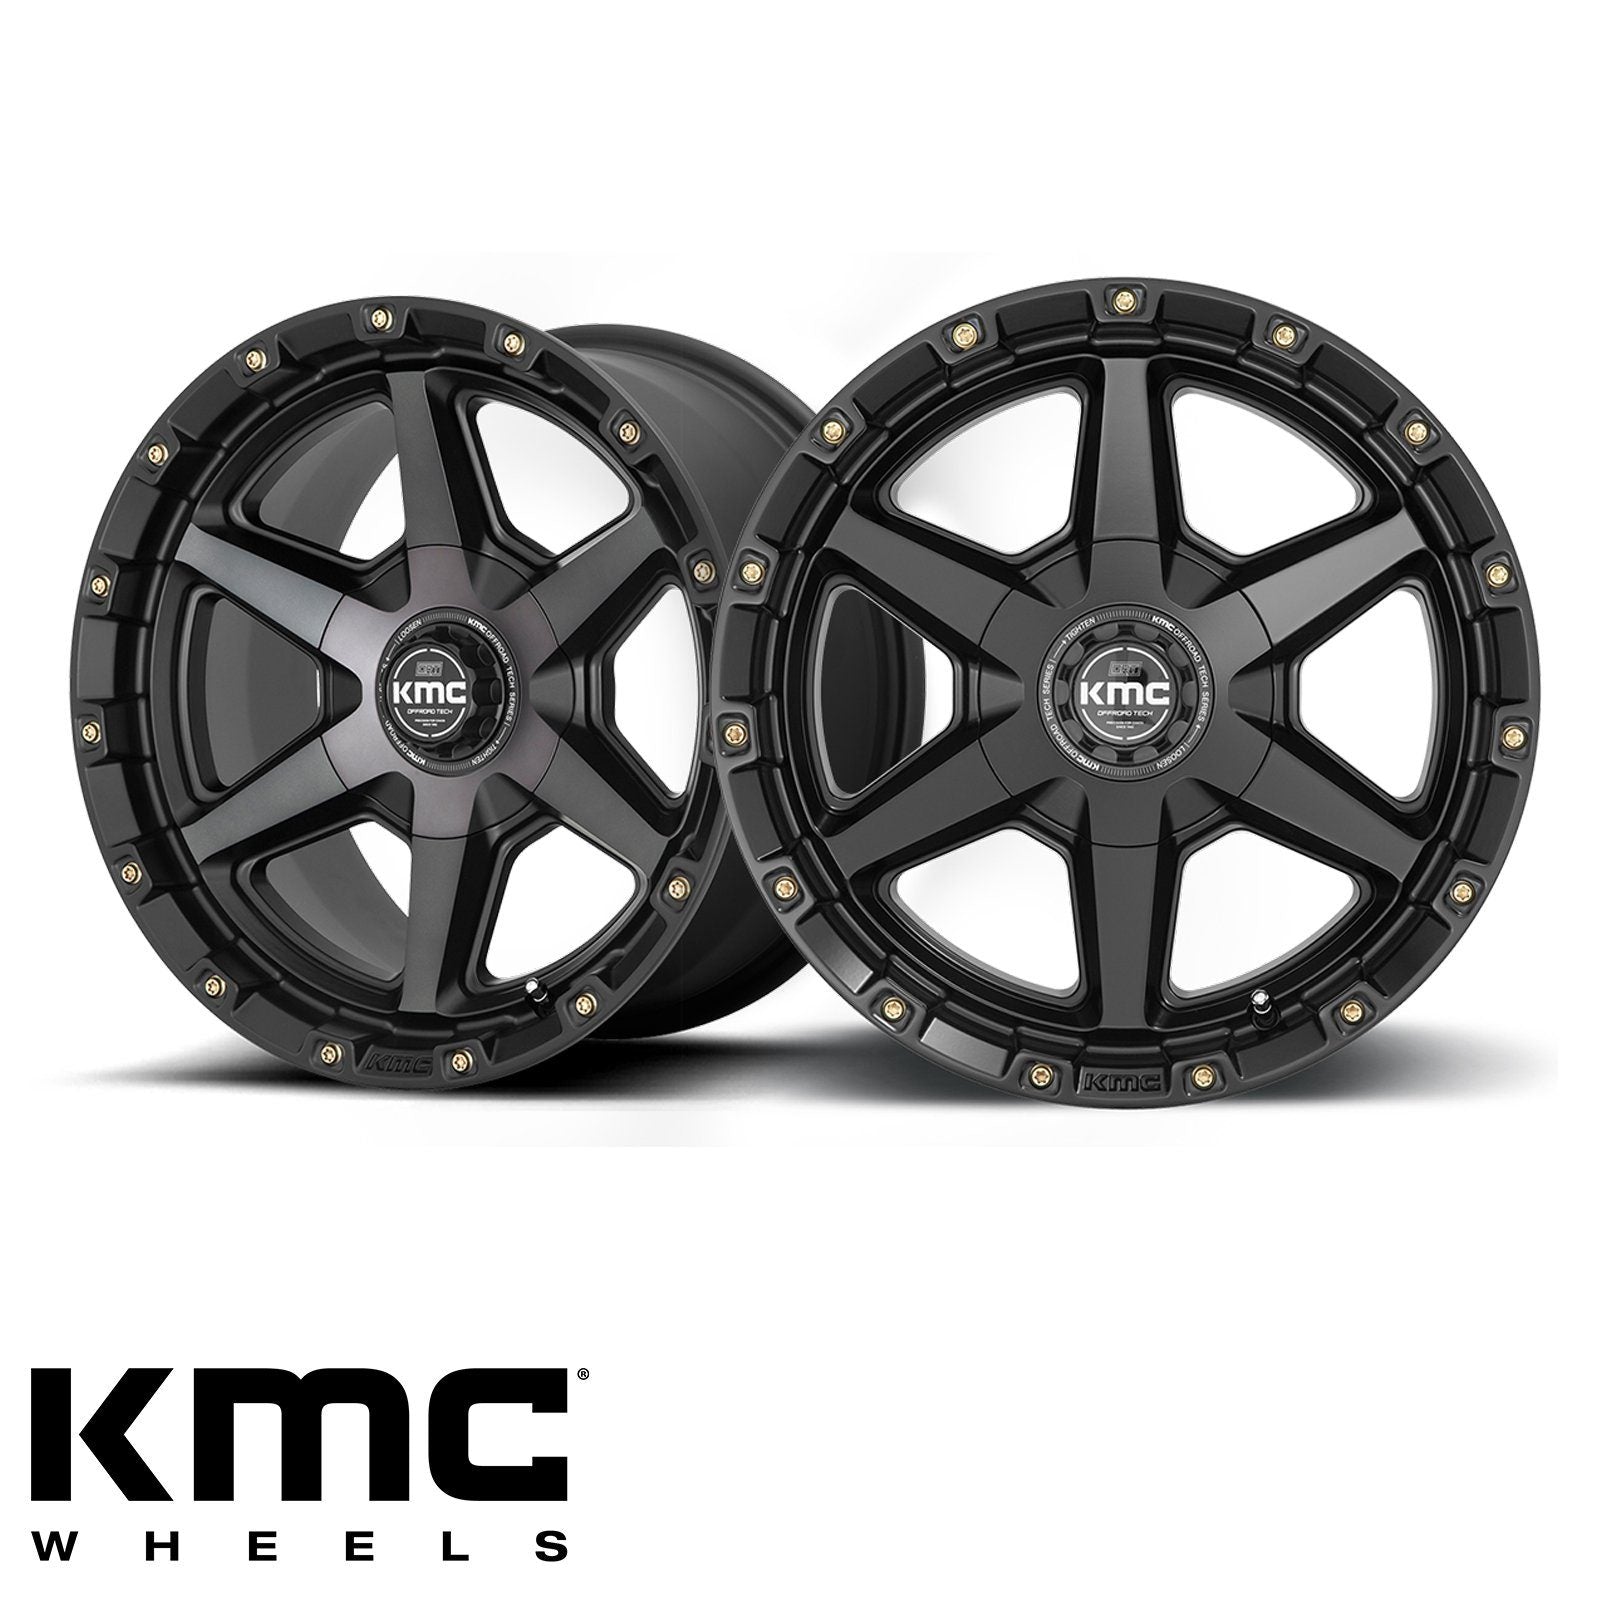 KMC Tempo KM101 17" Wheels KMC Wheels display